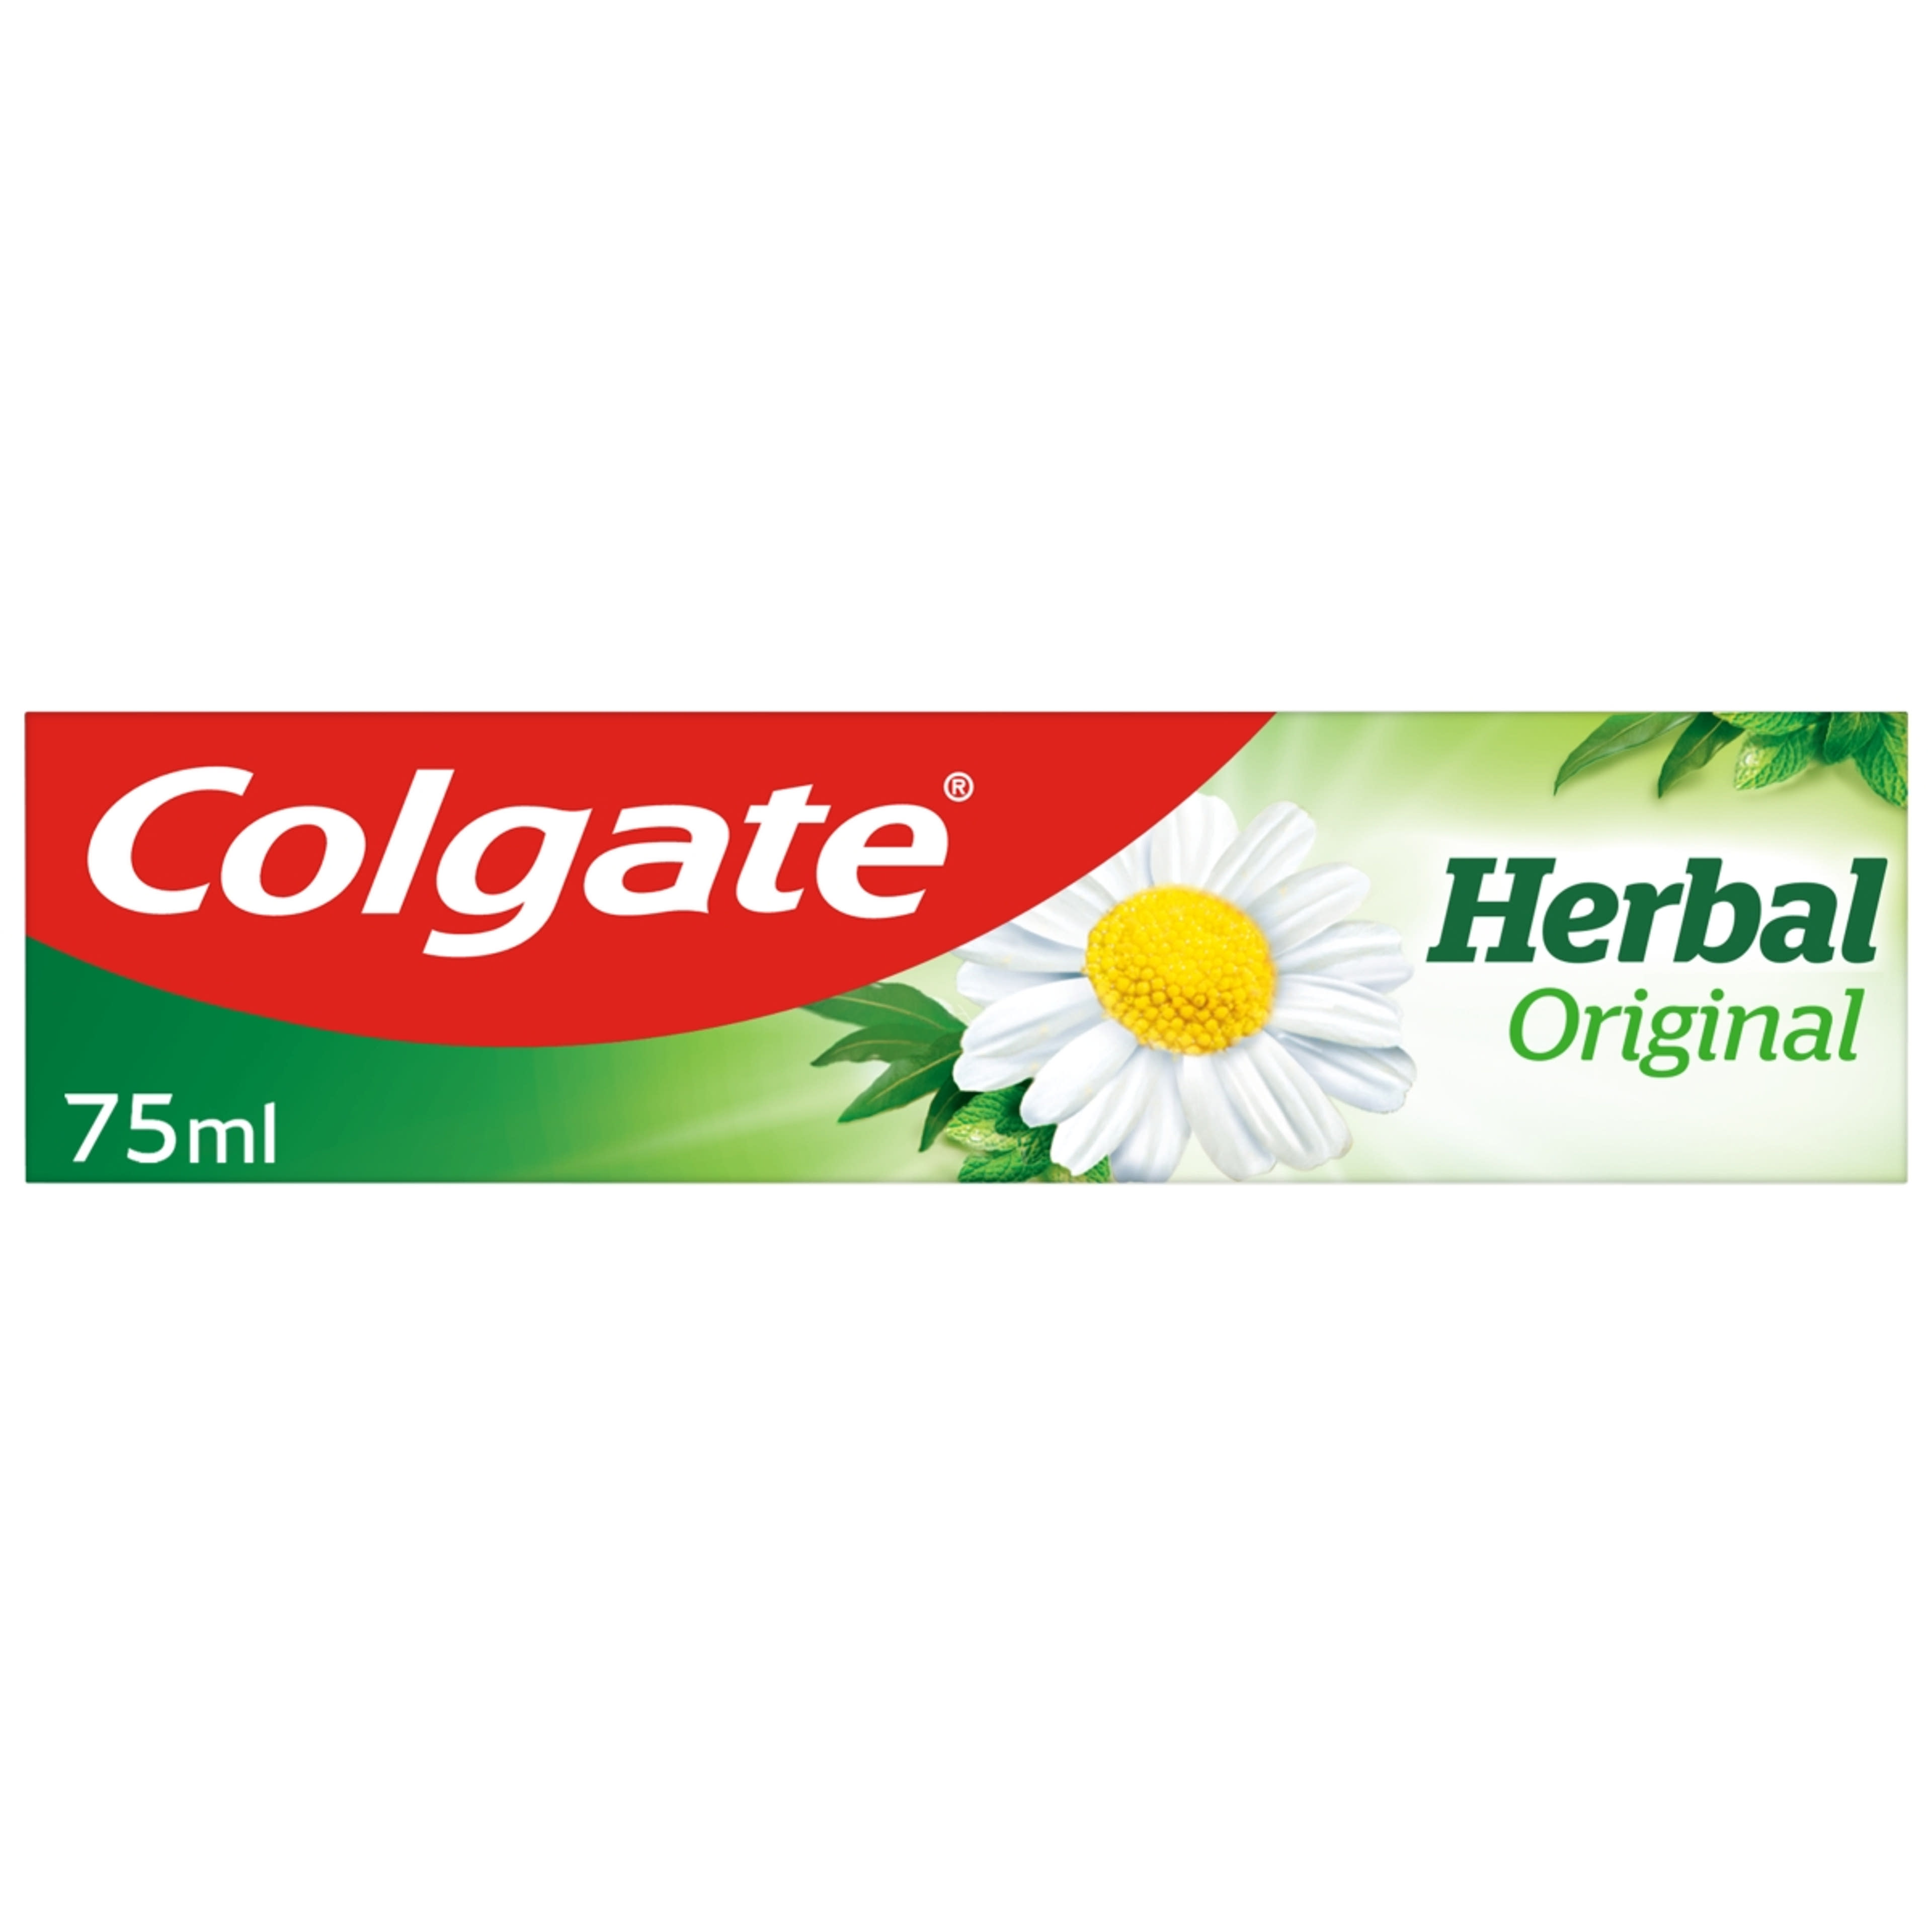 Colgate Herbal Original fogkrém - 75 ml-4